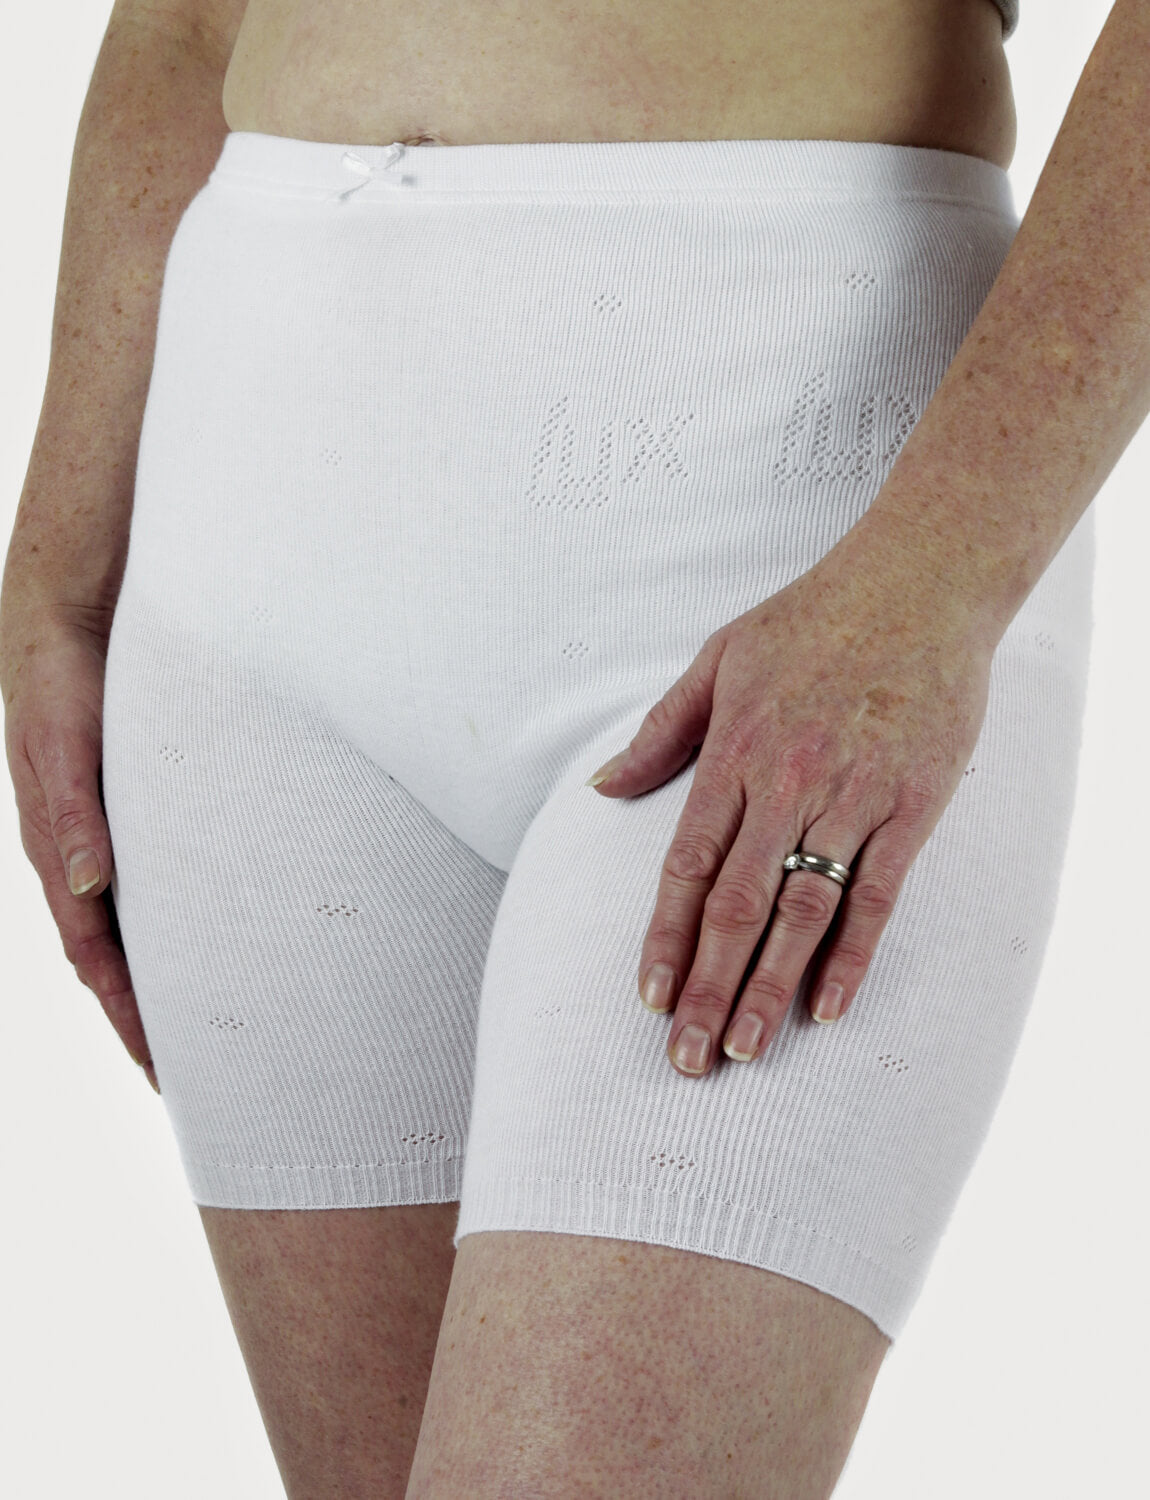 Long Length Pantee, Classic Cotton Underwear for Women